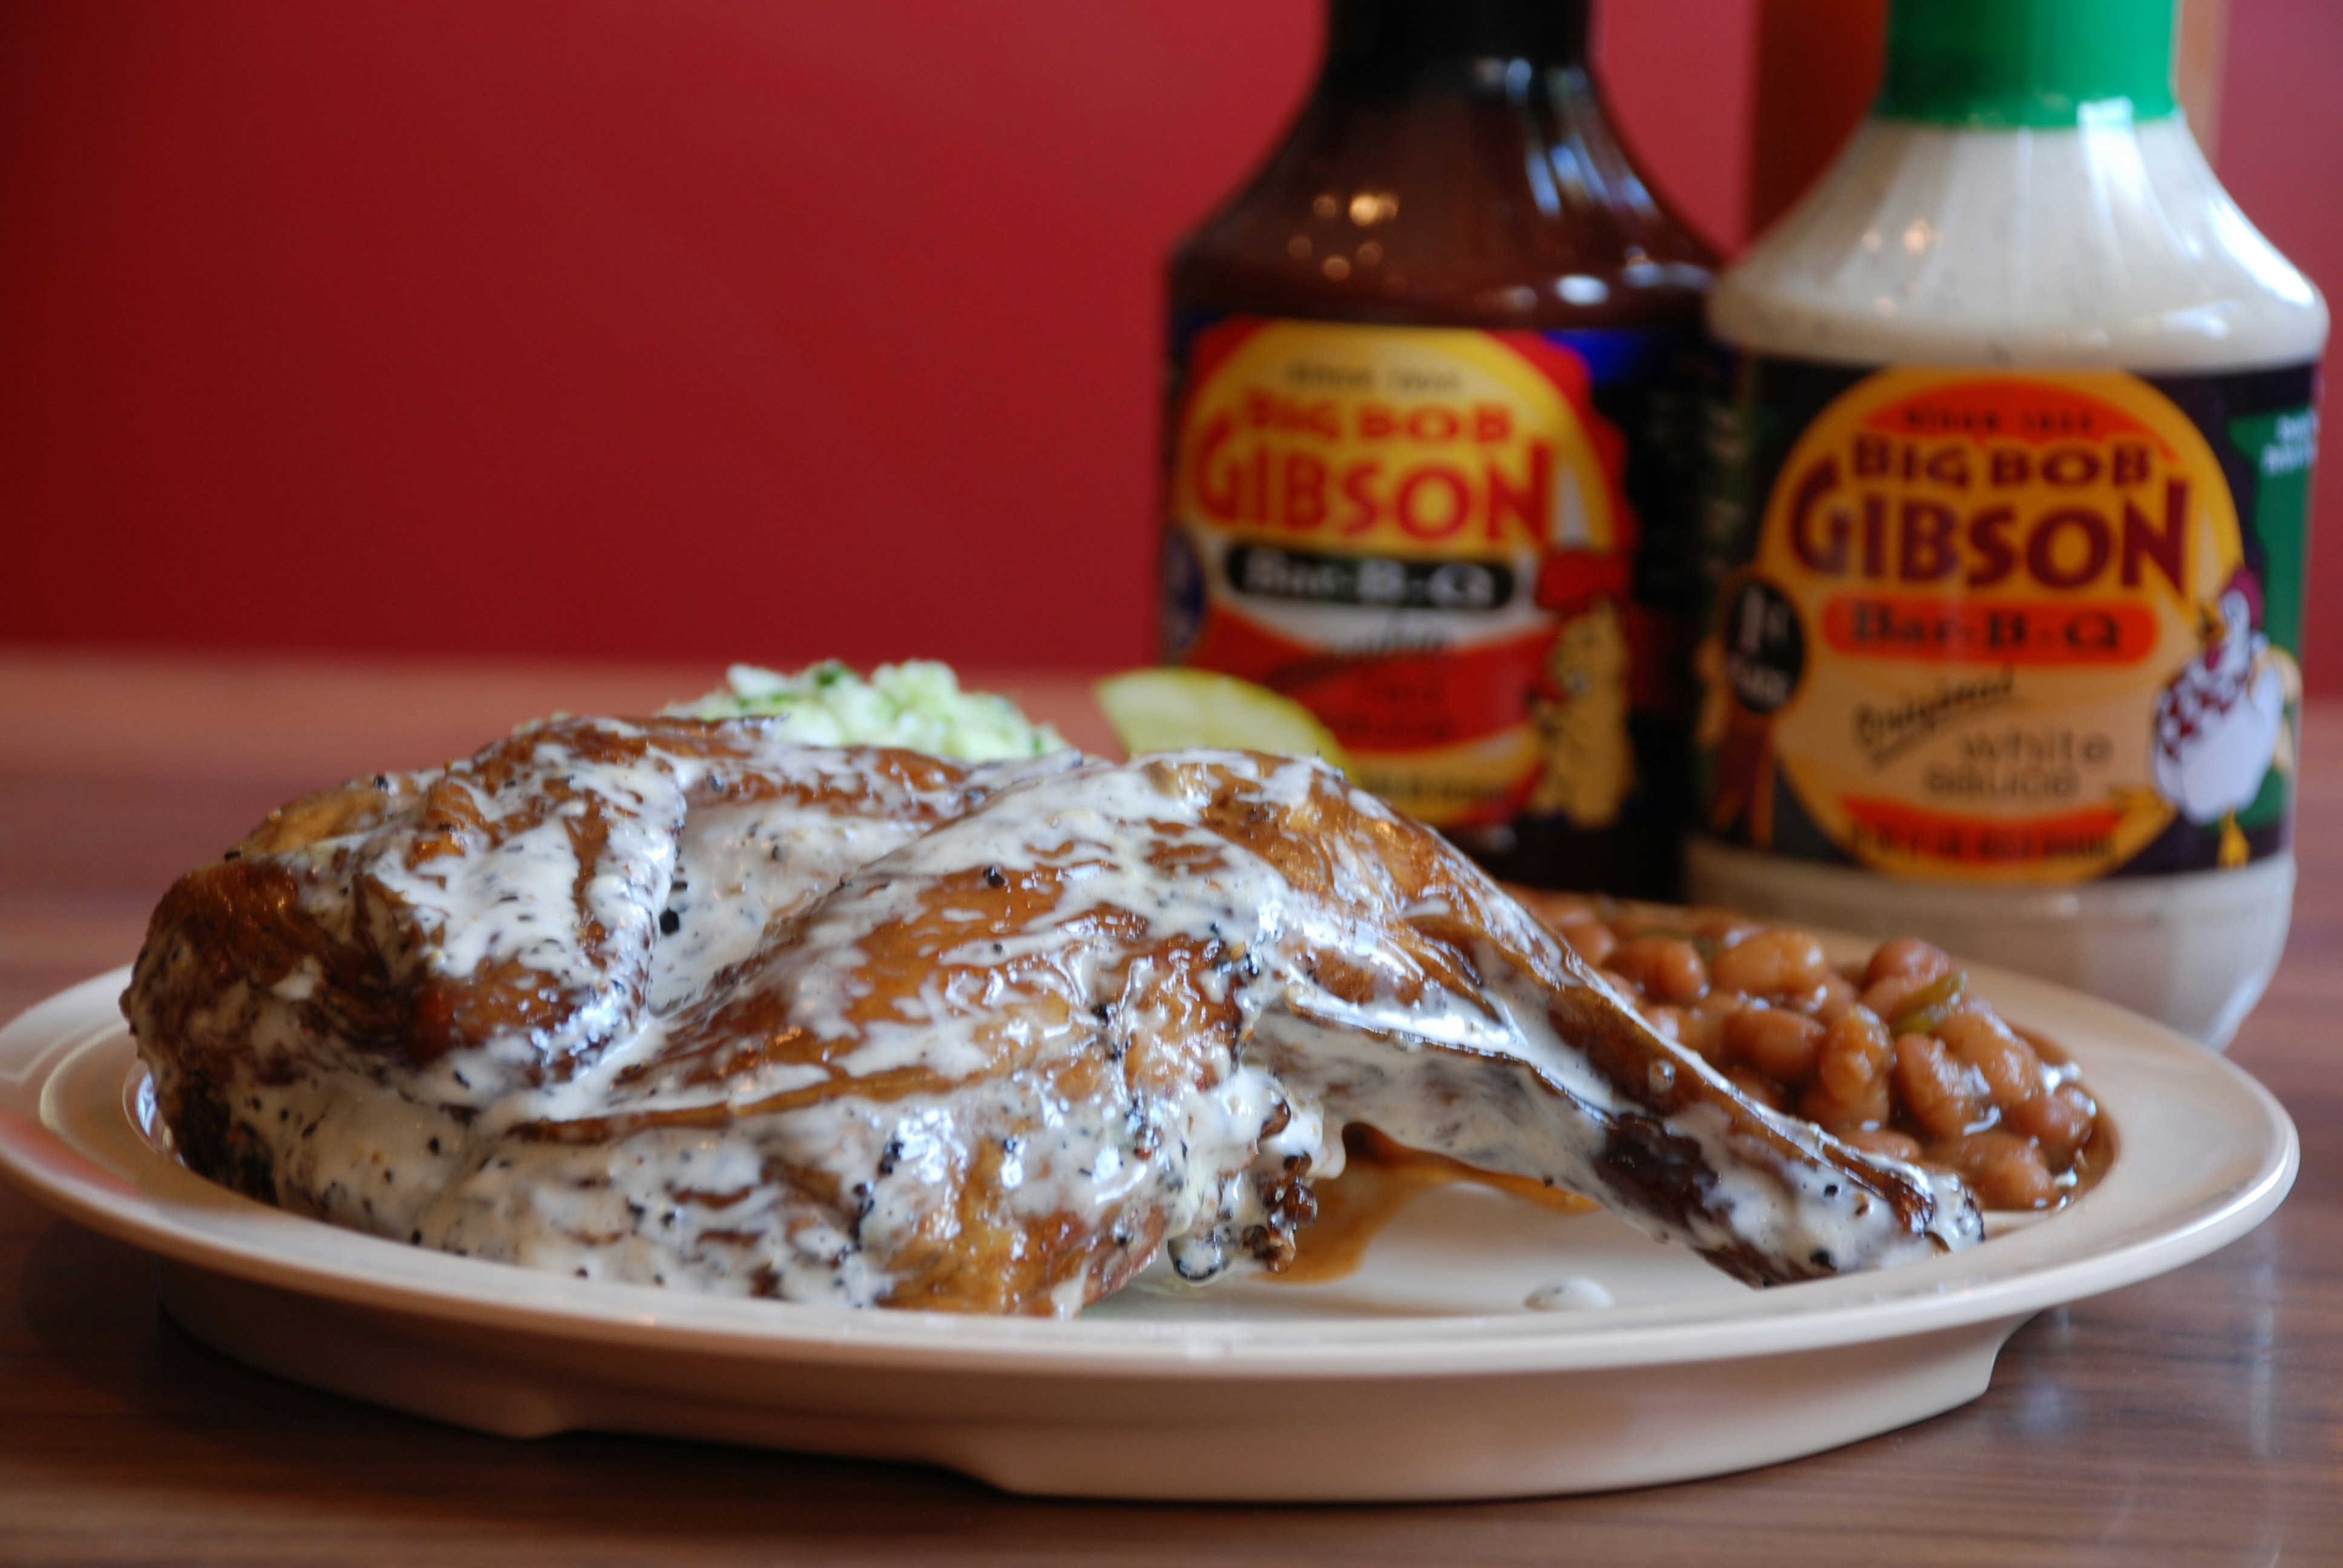 Big Bob Gibson white sauce chicken